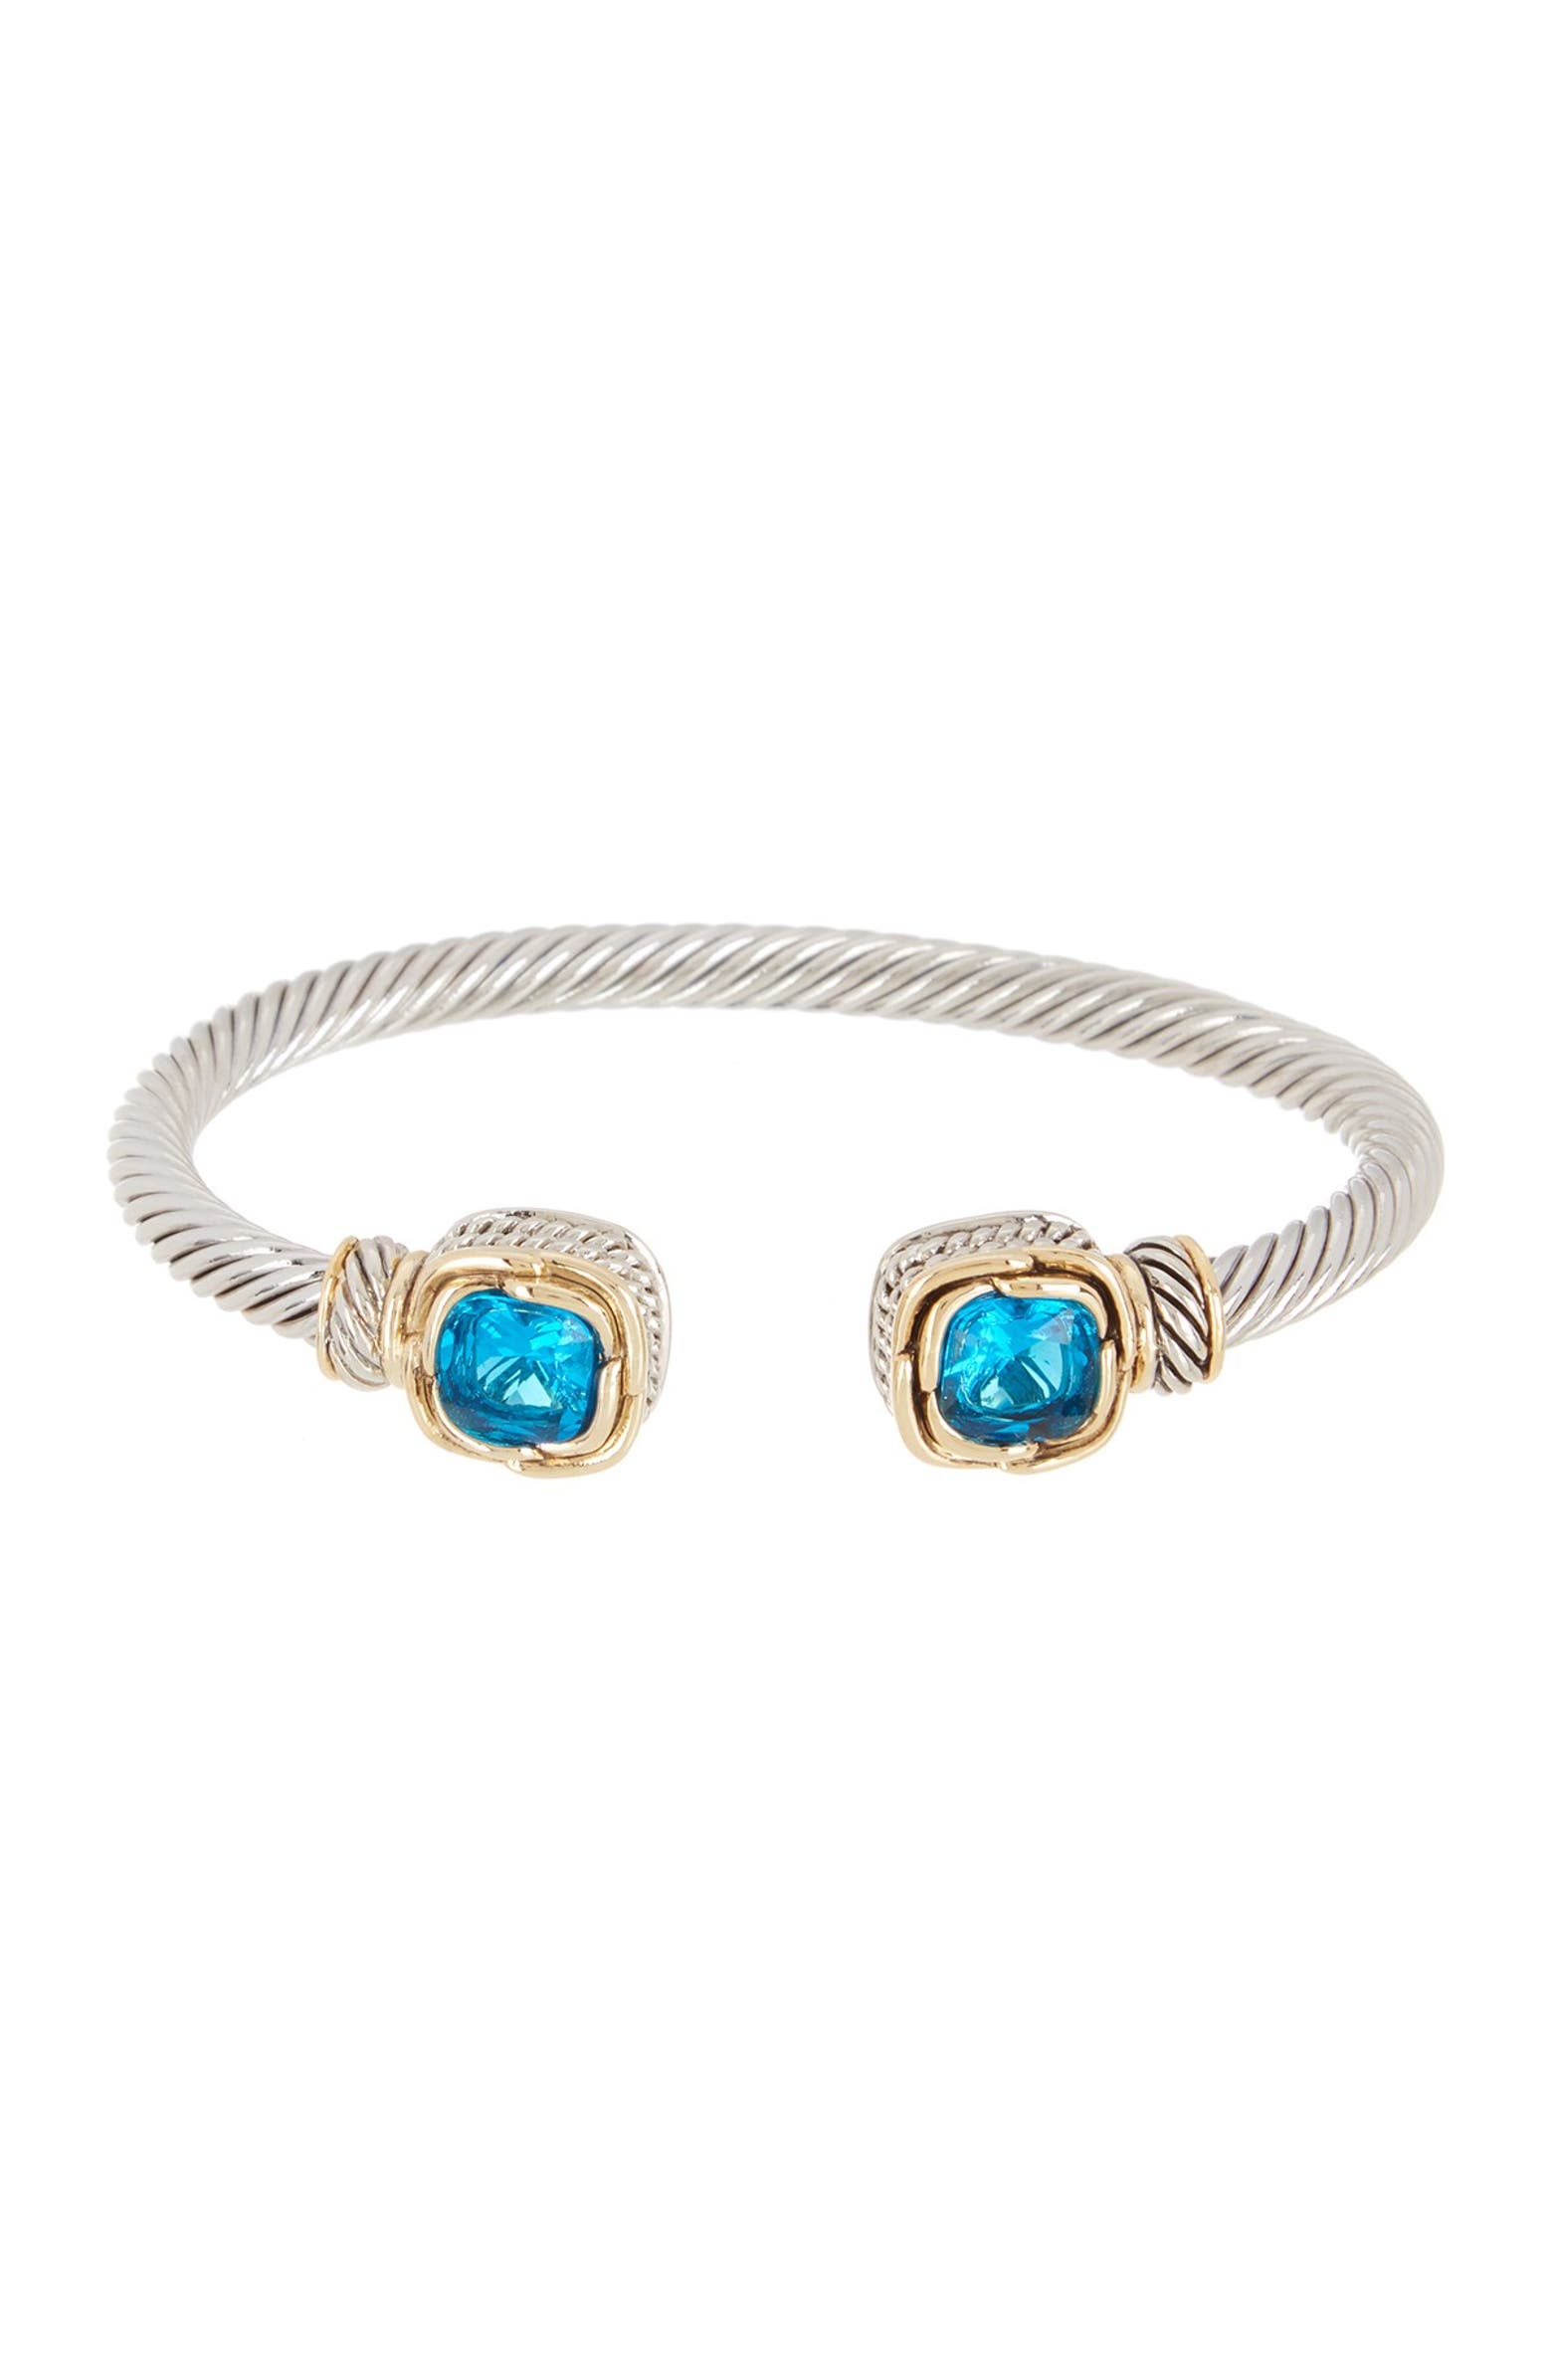 MESHMERISE Twisted Cable Blue Topaz Cuff Bracelet | Nordstromrack